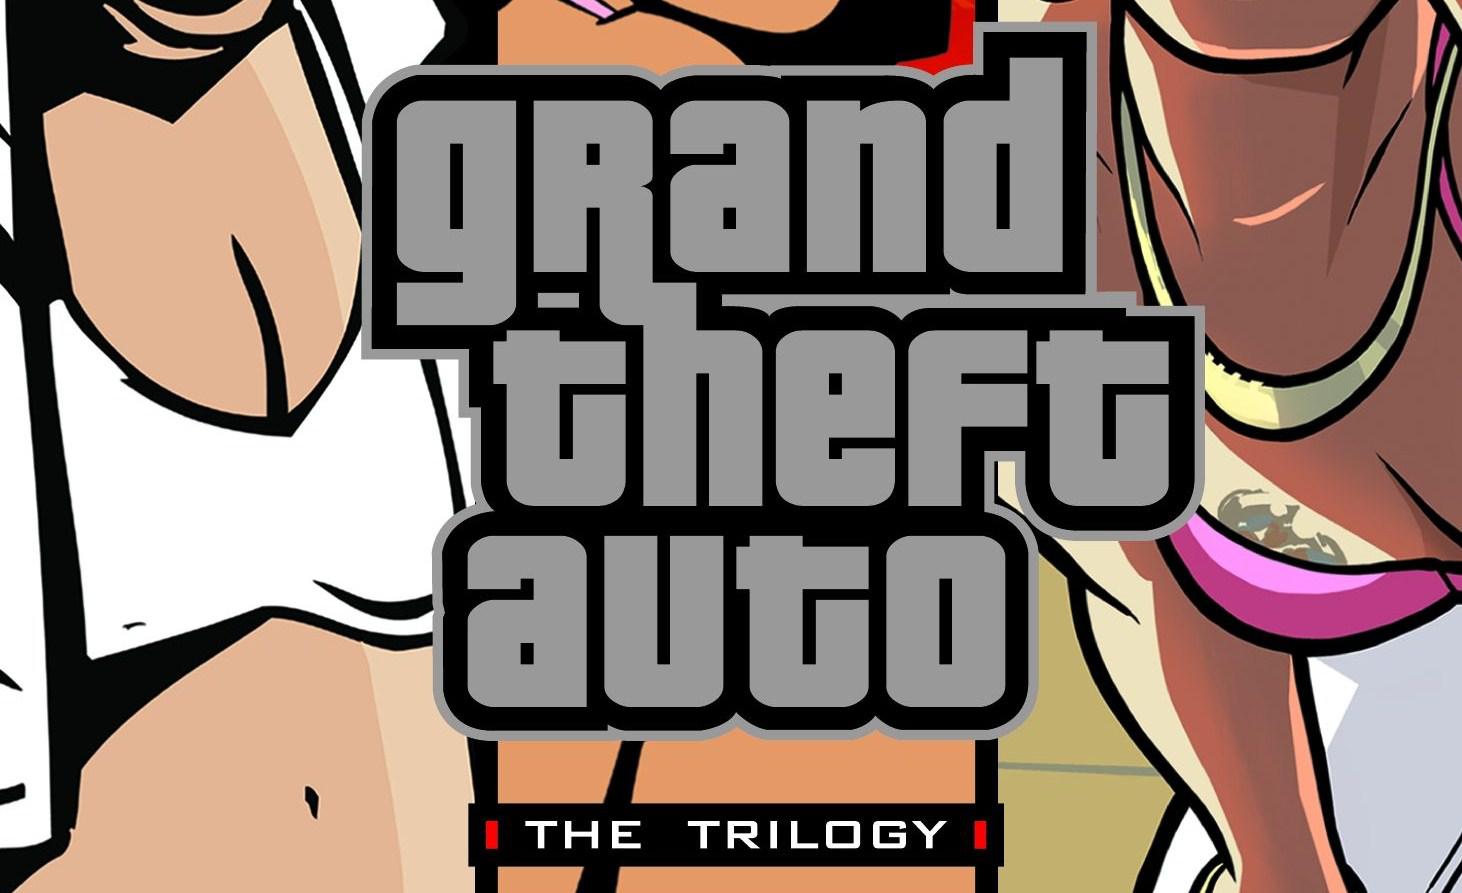 gta trilogie oosgame weebeetroc [actu Mac] Gran Theft Auto Trilogie sur vos Mac